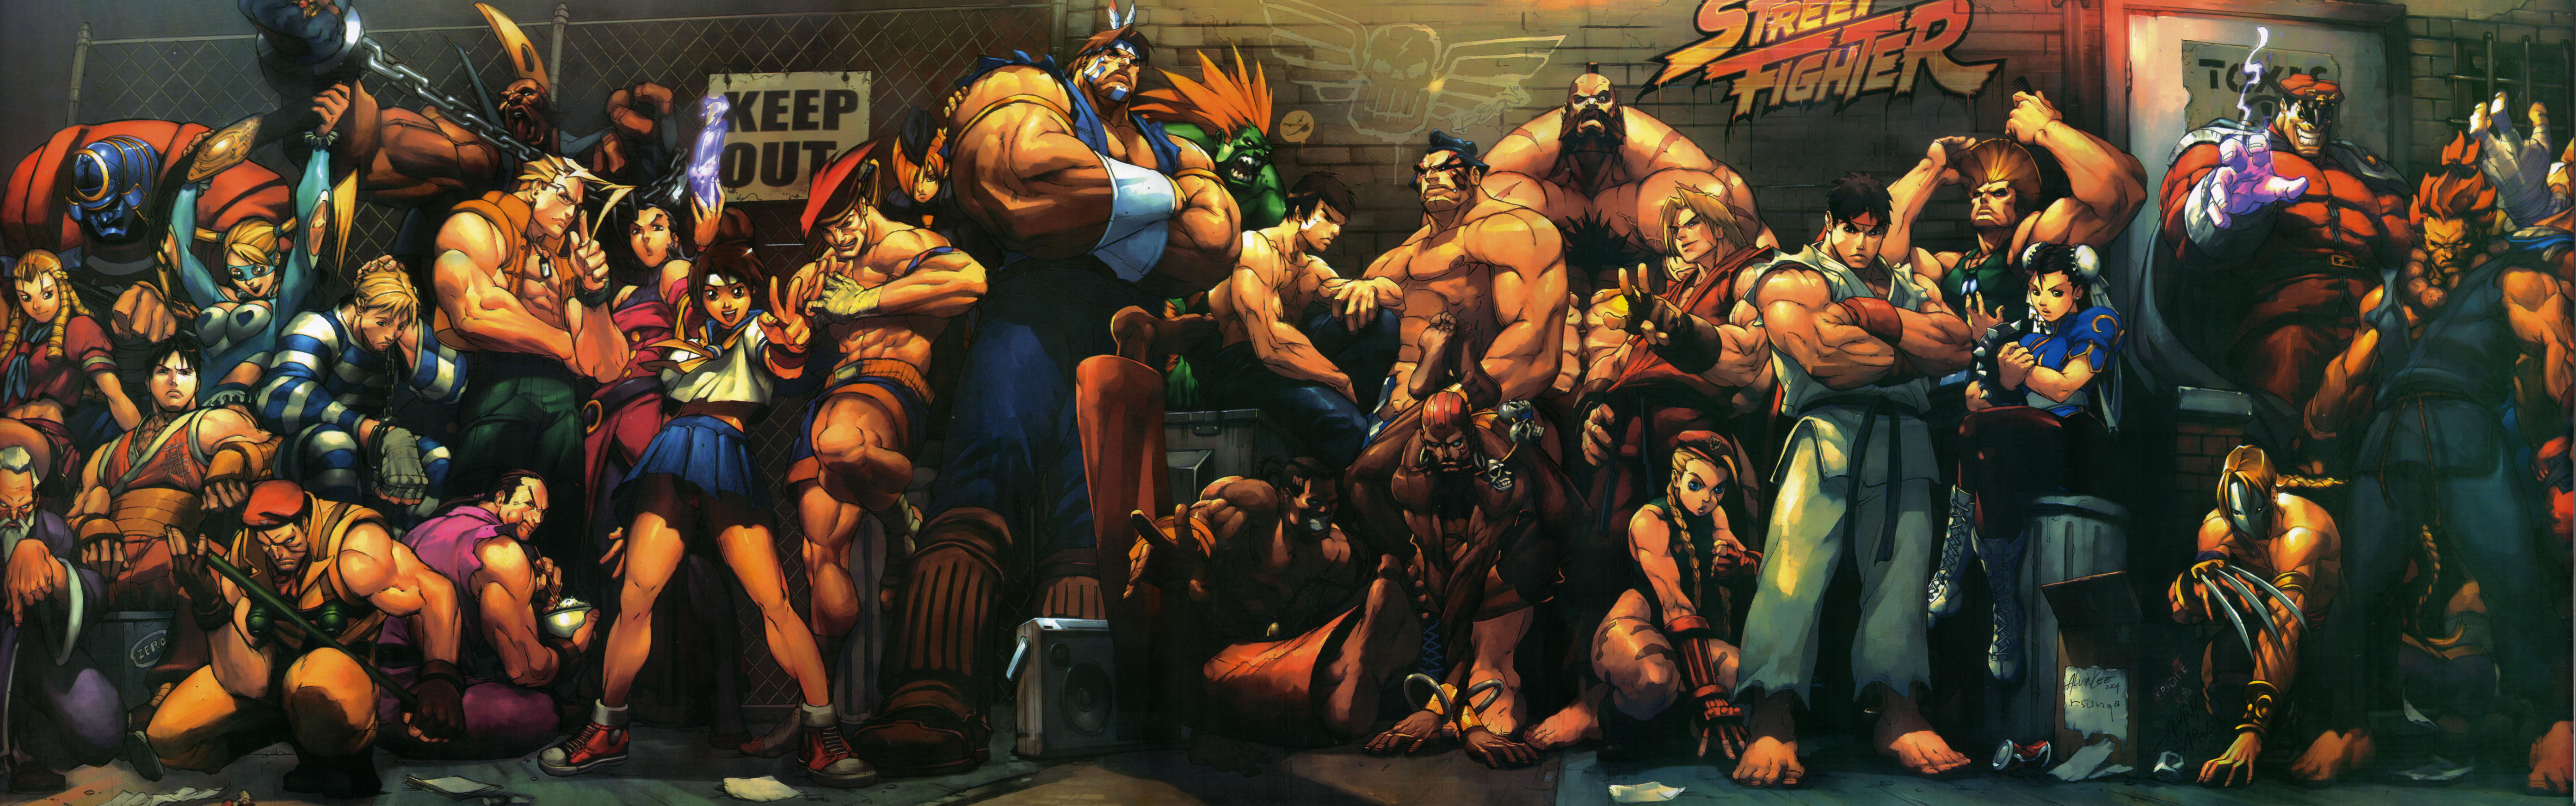 Street Fighter Street Fighter Ii Movie 1994 5570x1743 Wallpaper Teahub Io